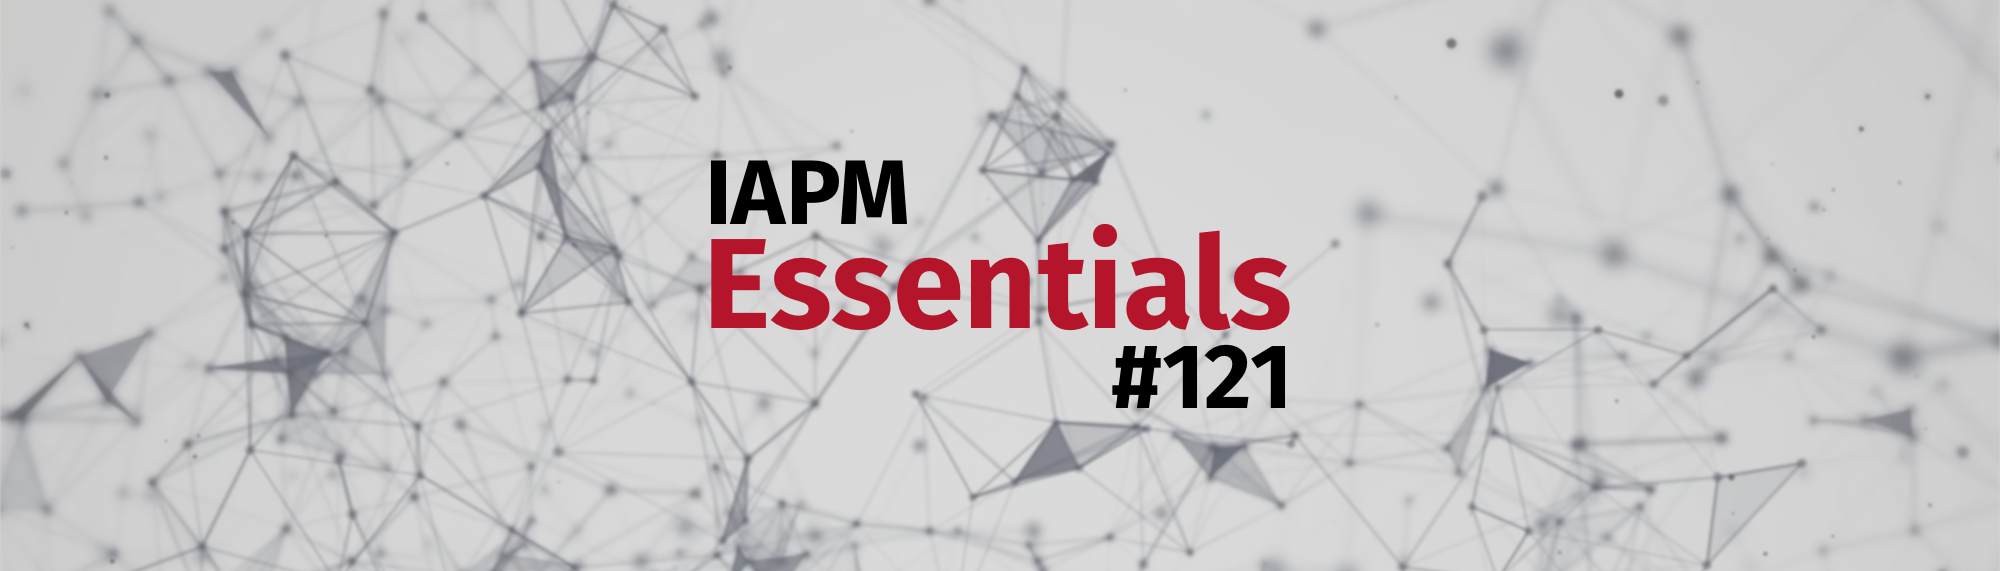 IAPM Essentials #121 - PM Neuigkeiten | IAPM